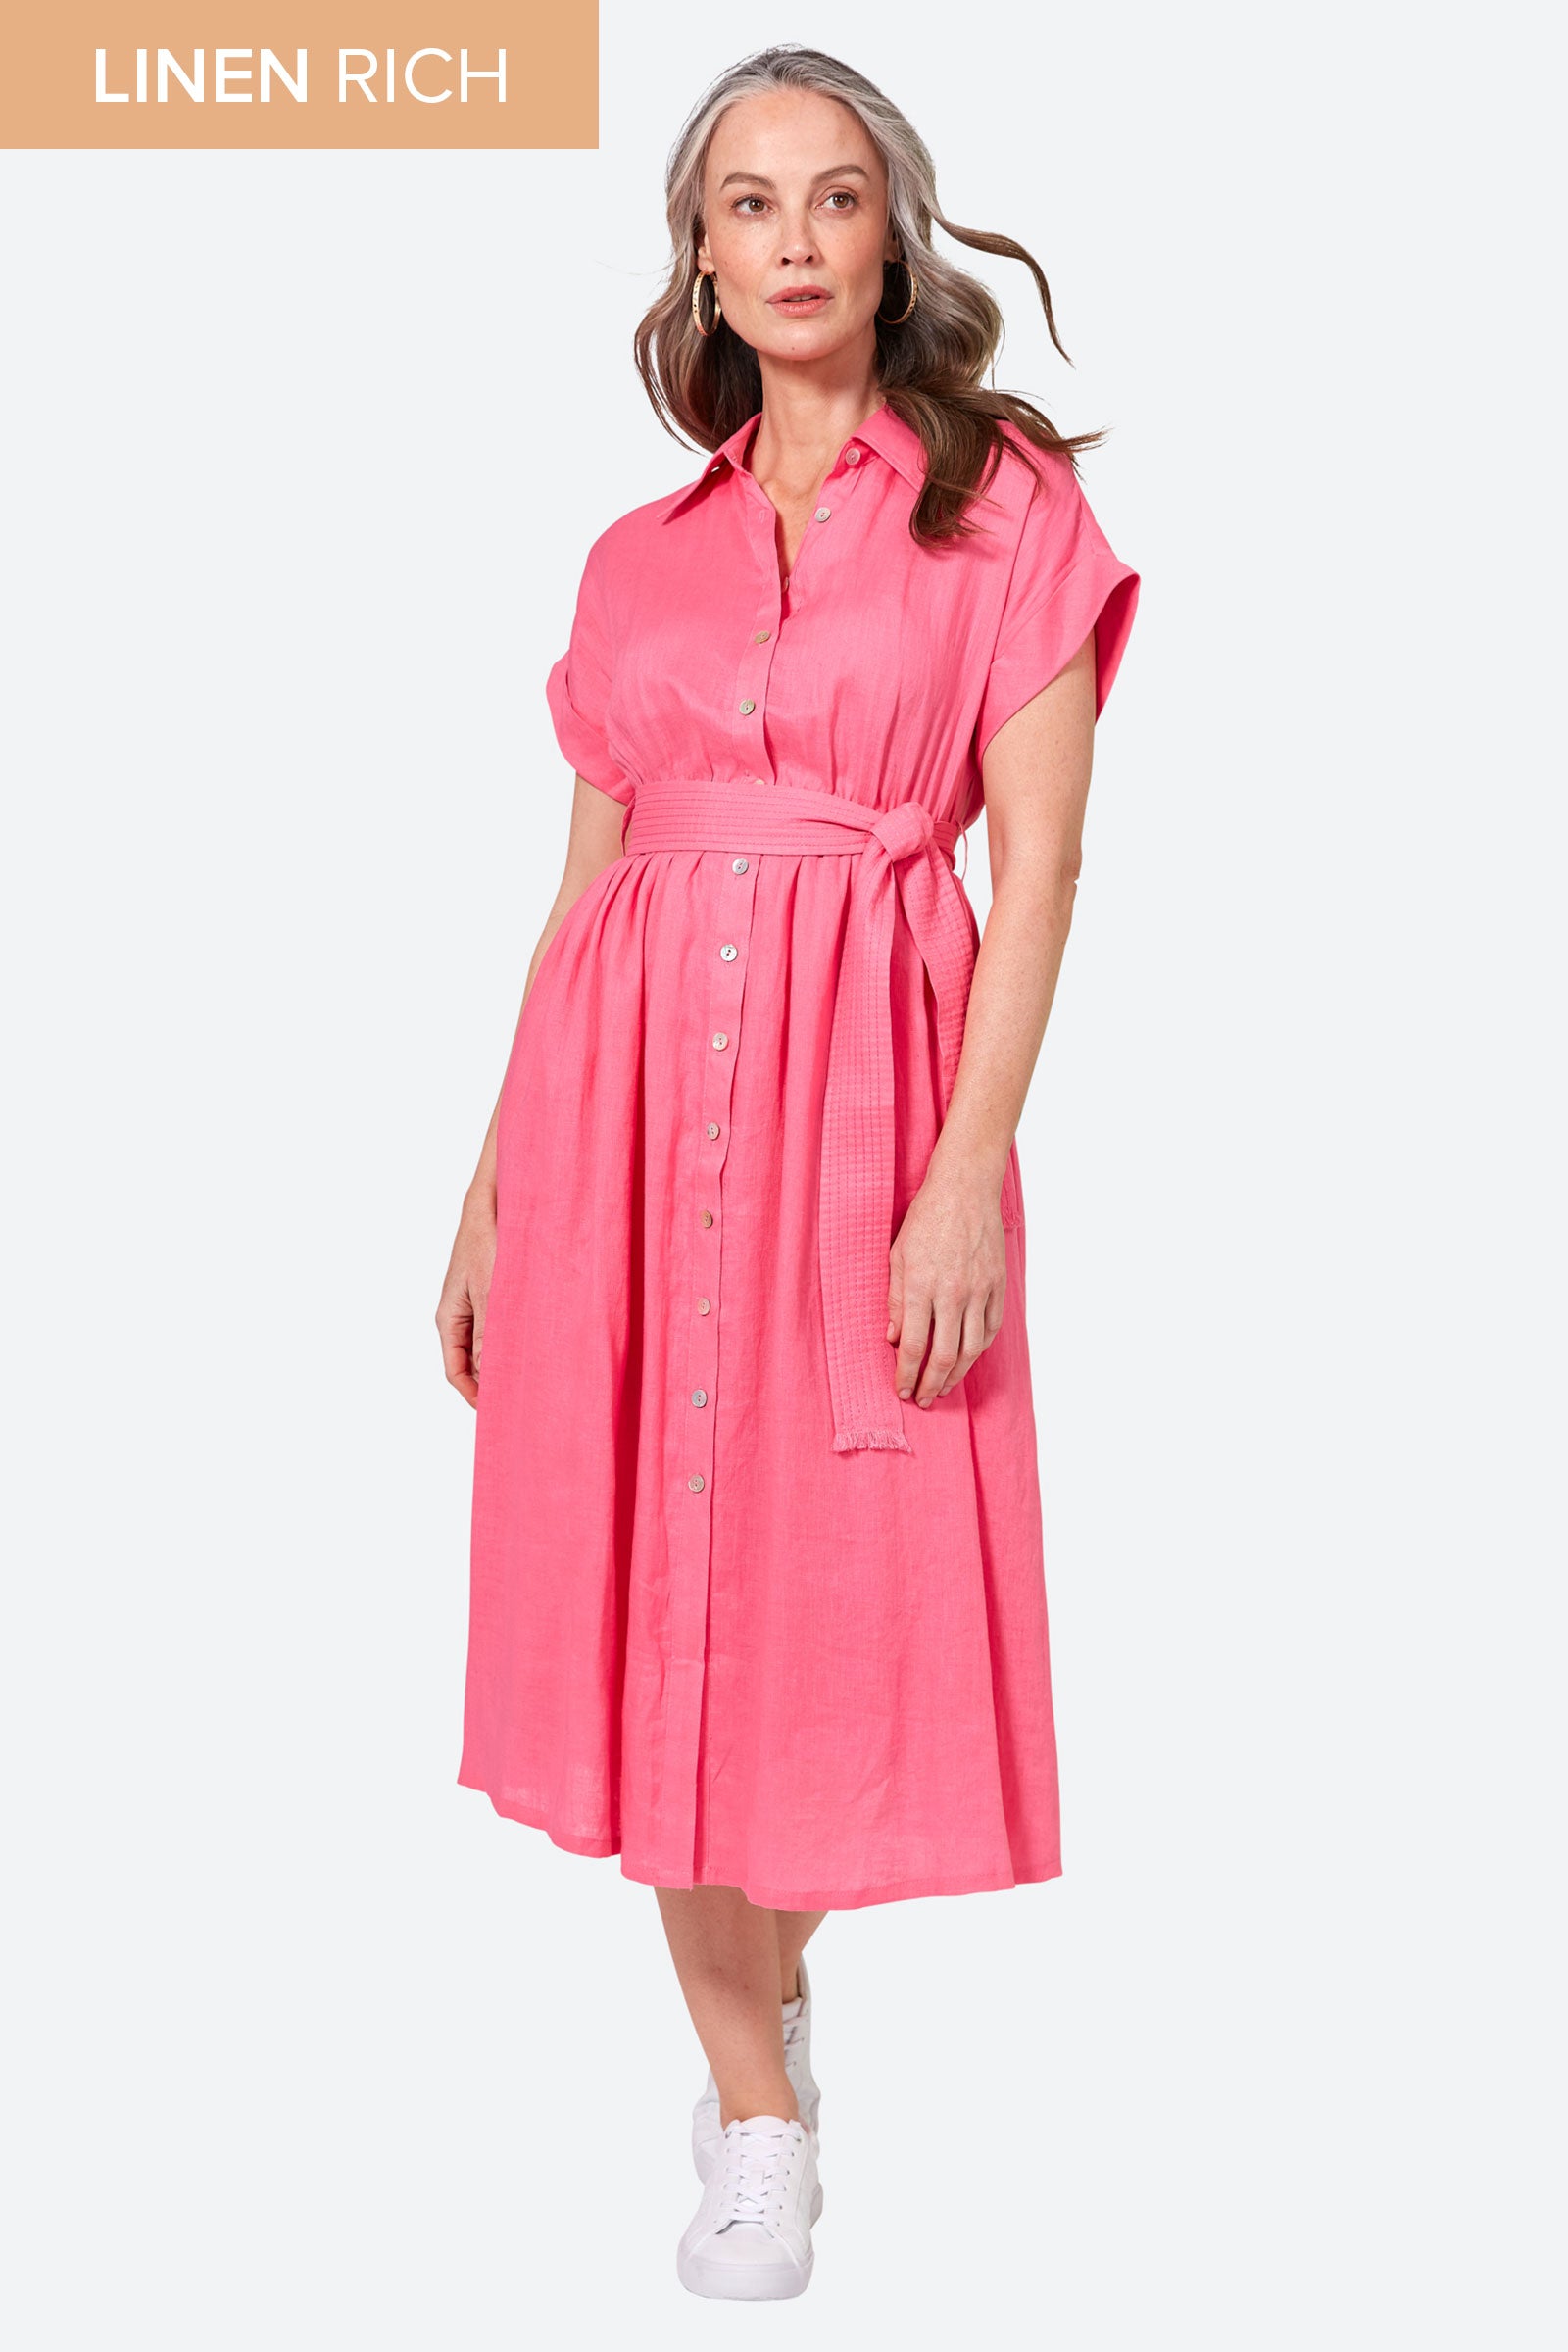 La Vie Shirt Dress - Candy - eb&ive Clothing - Shirt Dress Maxi Linen